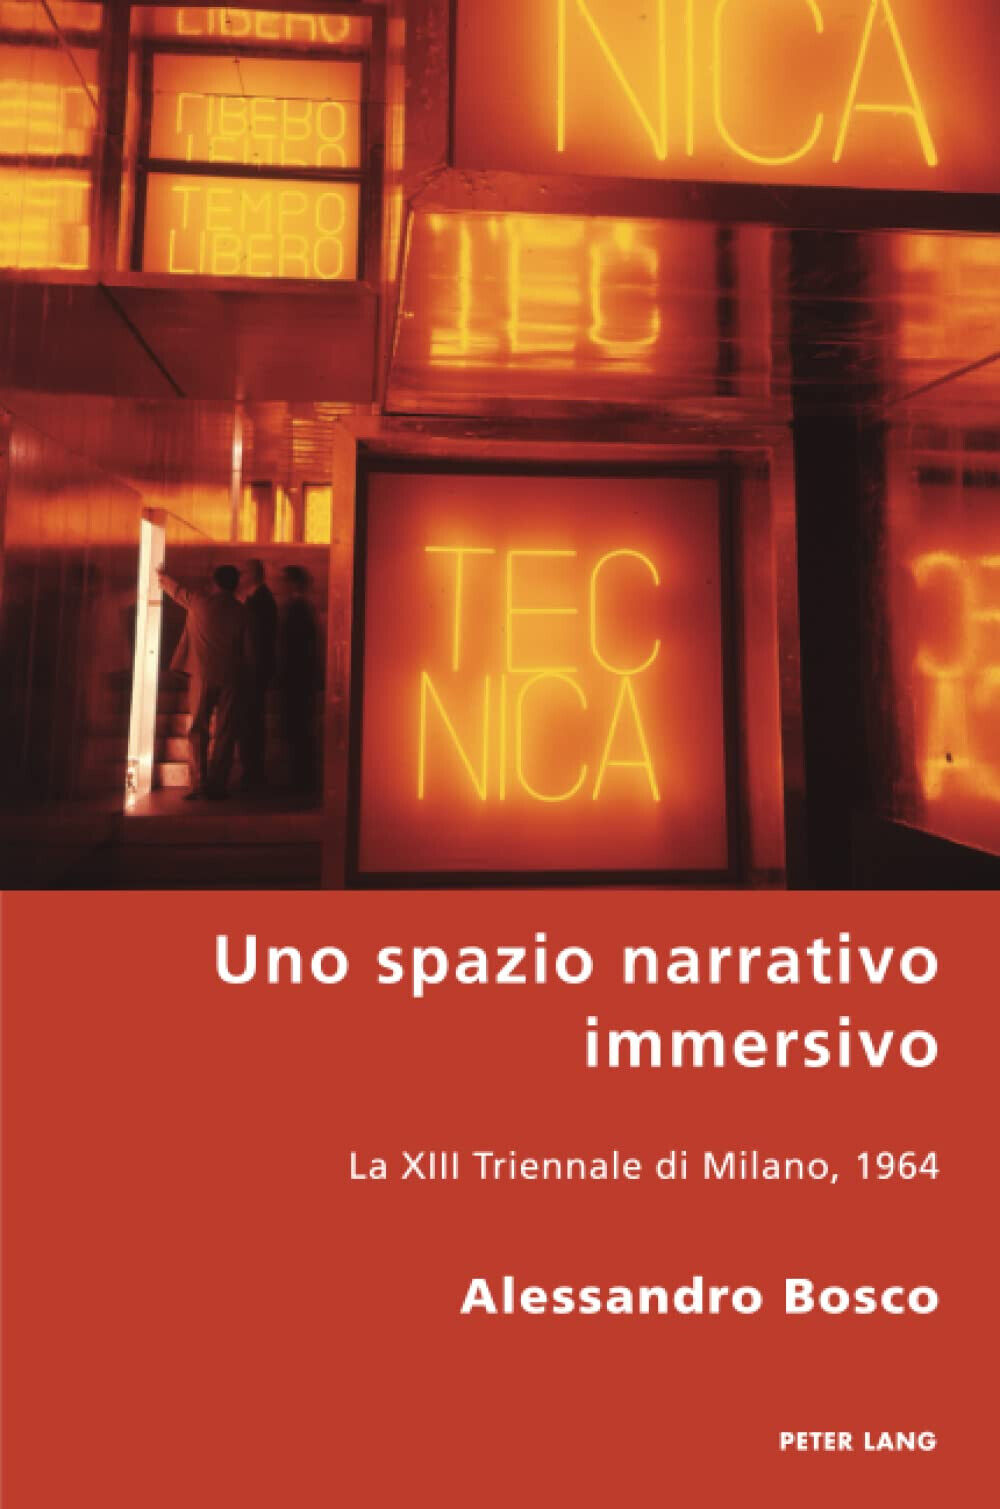 Uno spazio narrativo immersivo - Alessandro Bosco -  Peter Lang, 2022